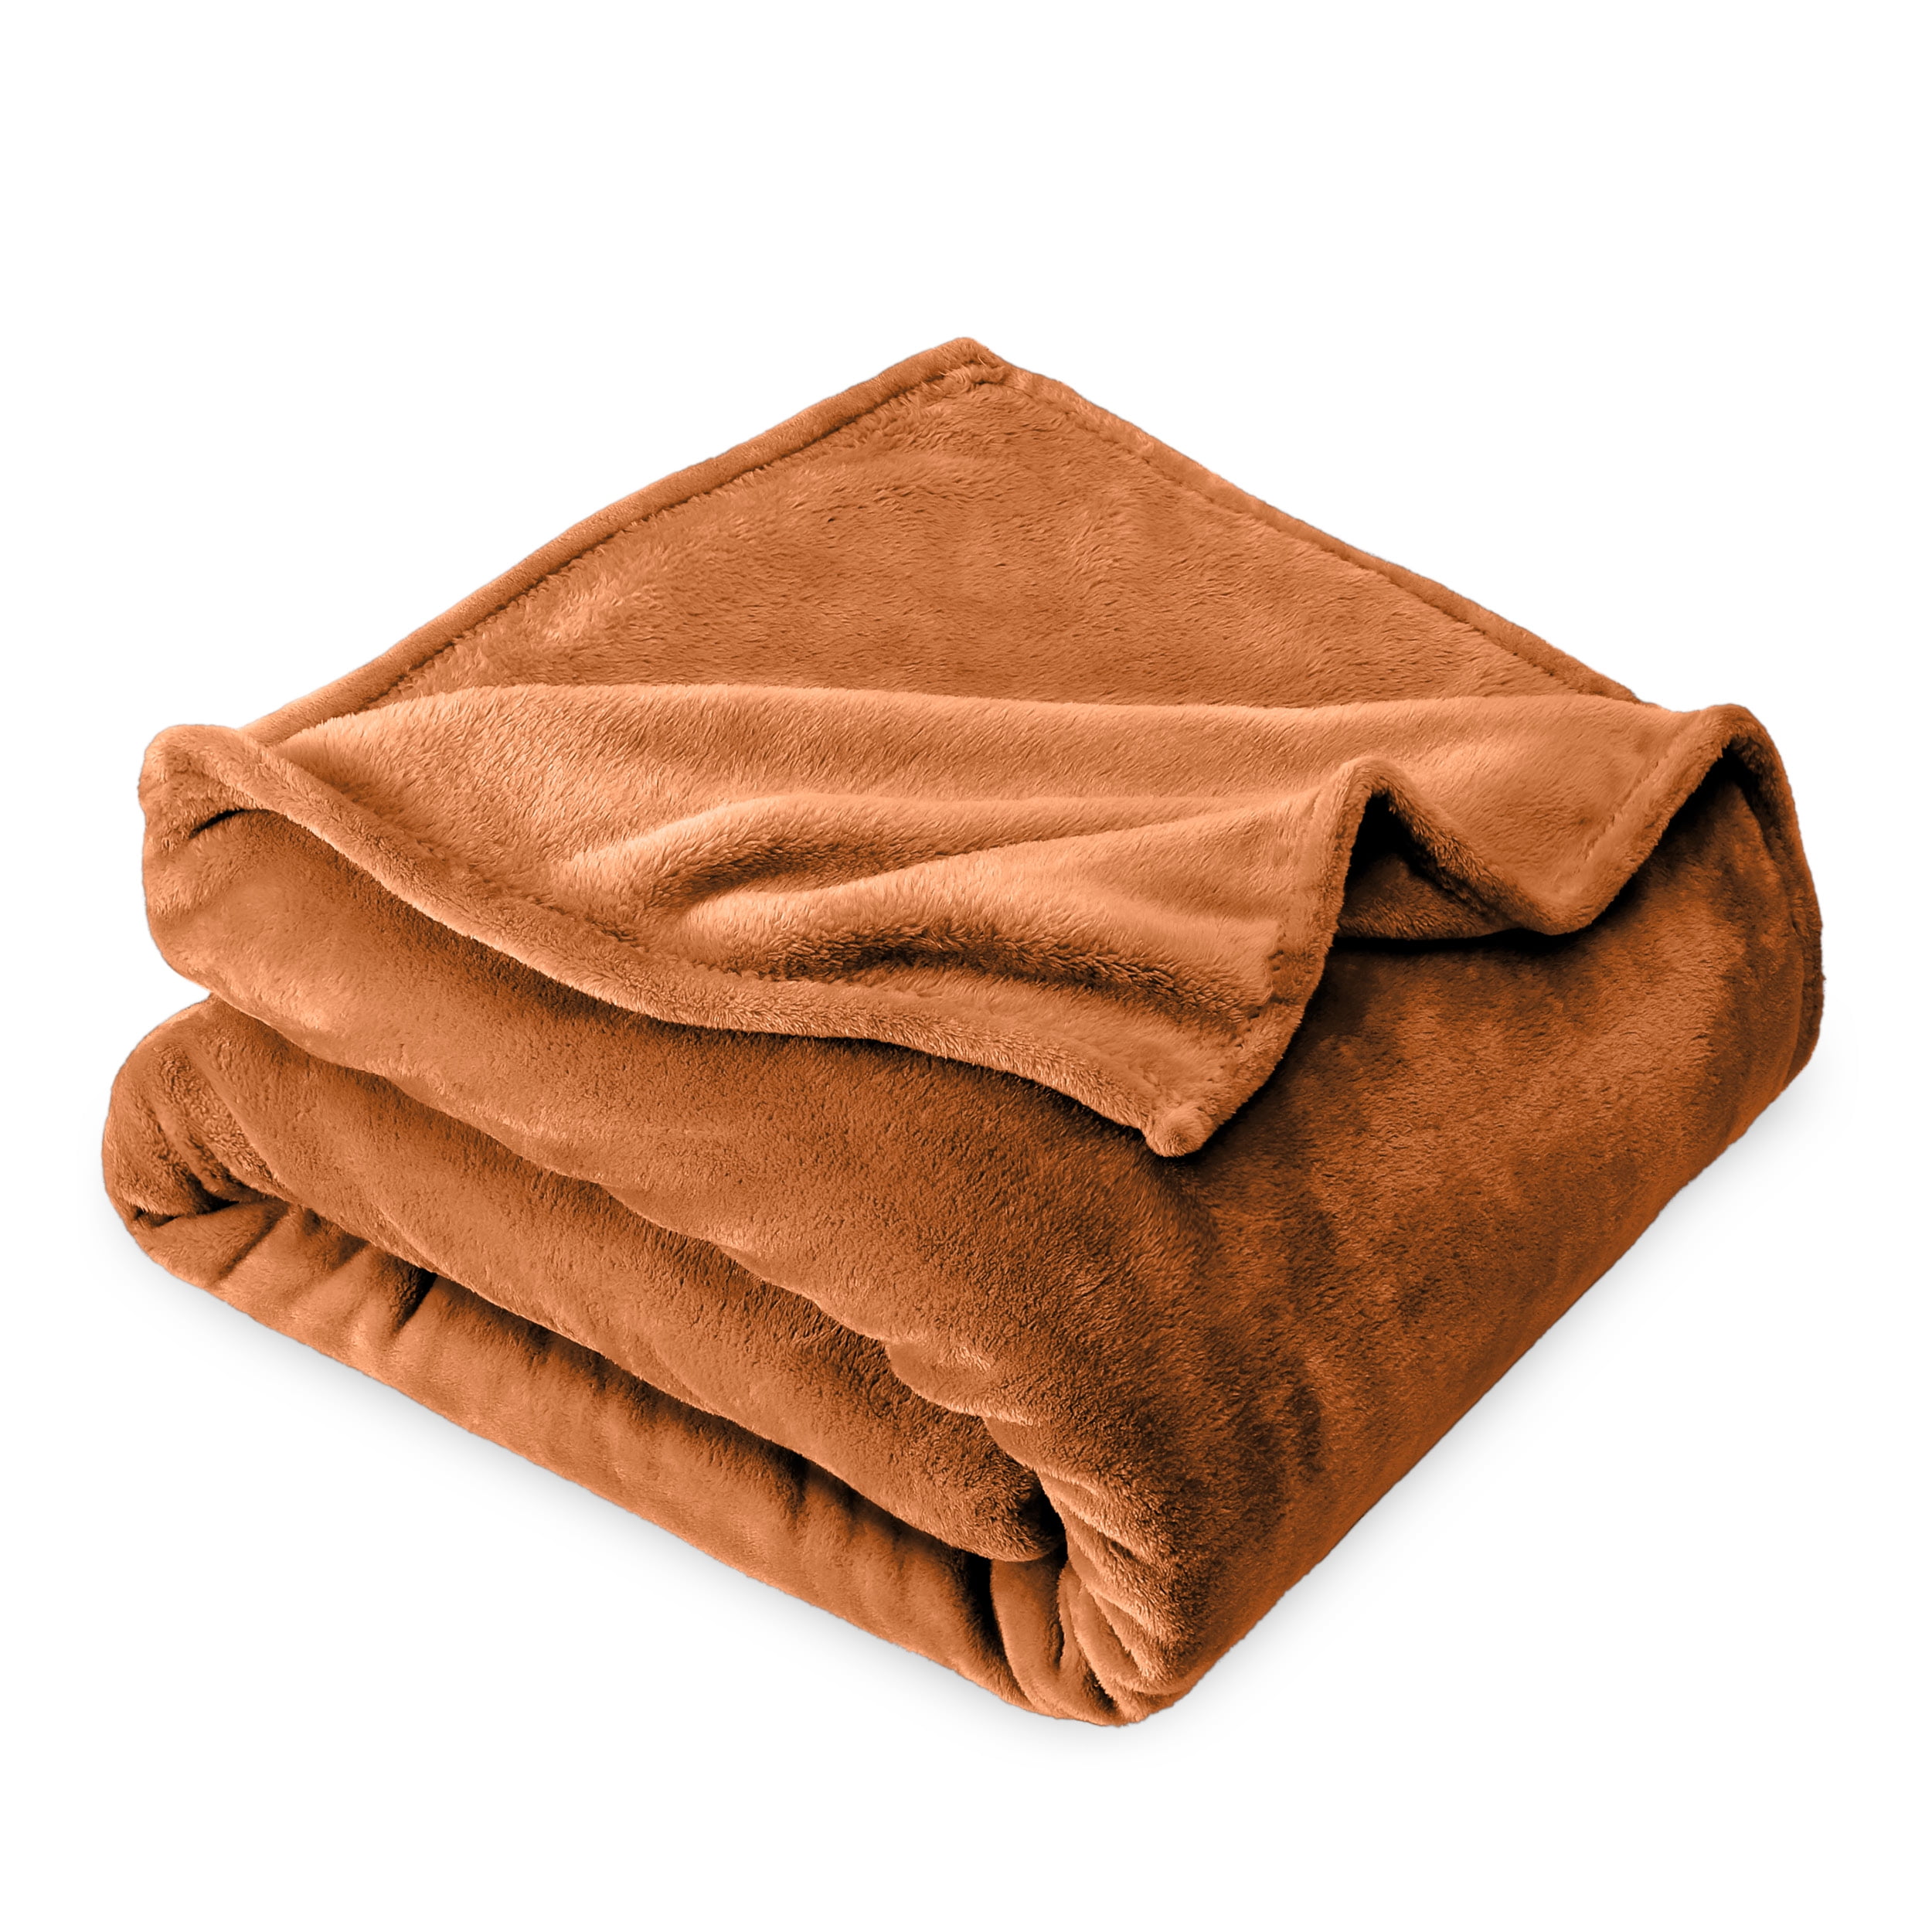 Bare Home Microplush 300 Blanket - Fleece Sienna GSM - Fuzzy Soft & Microfleece - - Plush Throw/Travel